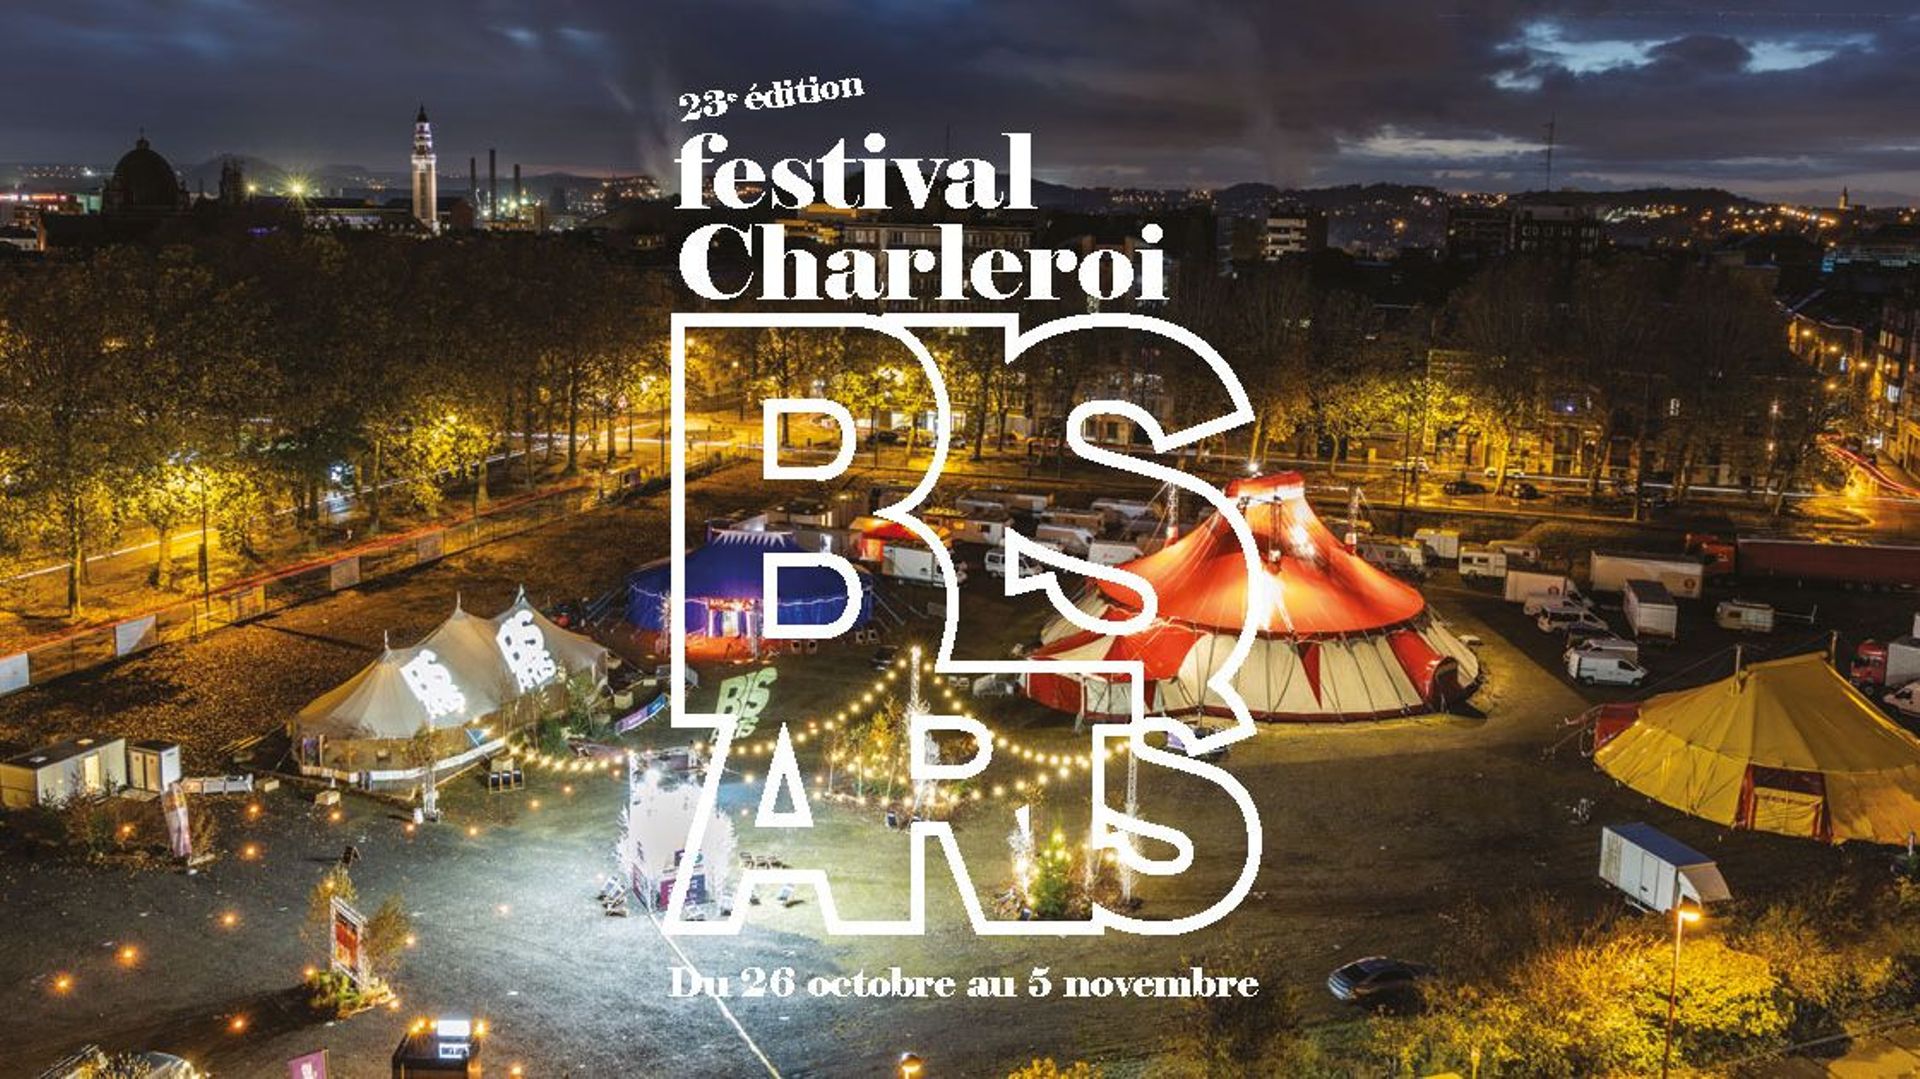 23e édition de Charleroi bisARTS